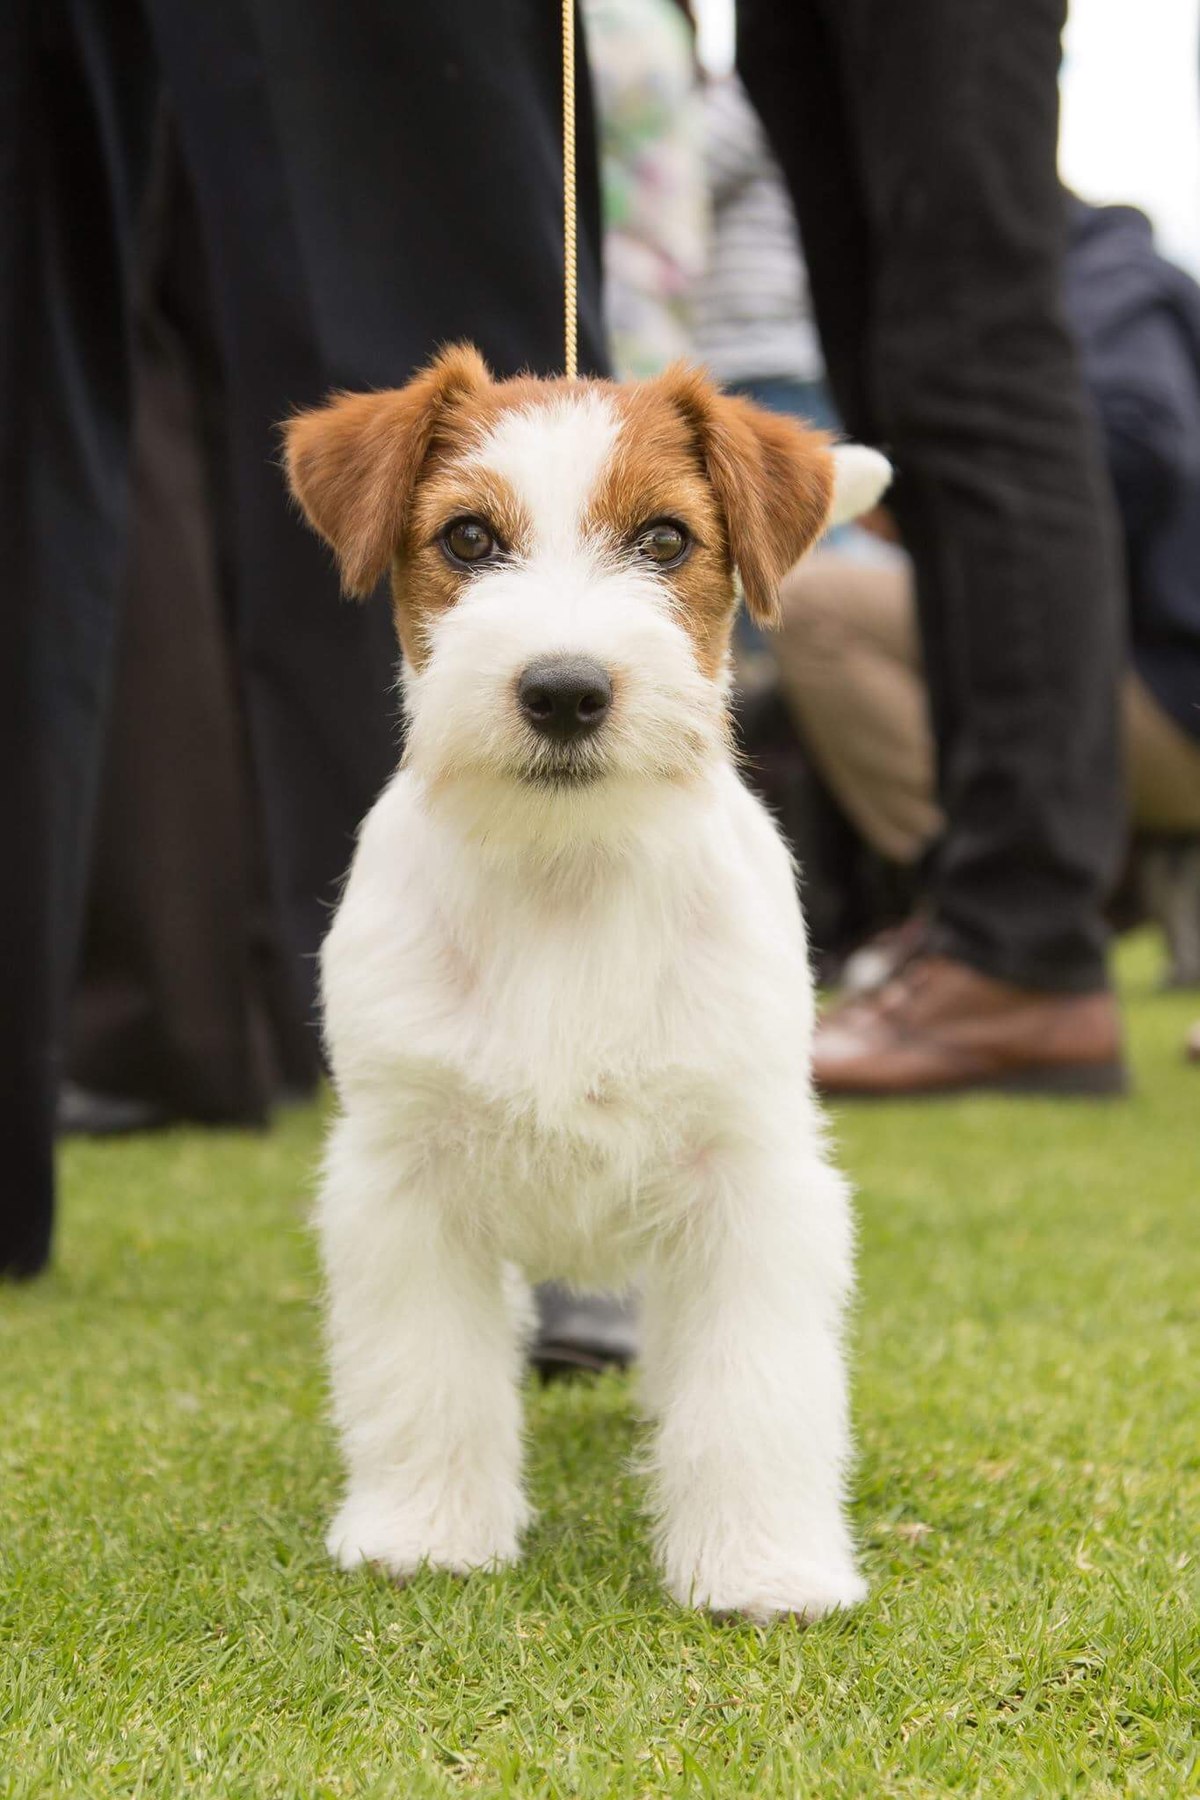 Jack Russell terrier - Wikipedia, la enciclopedia libre